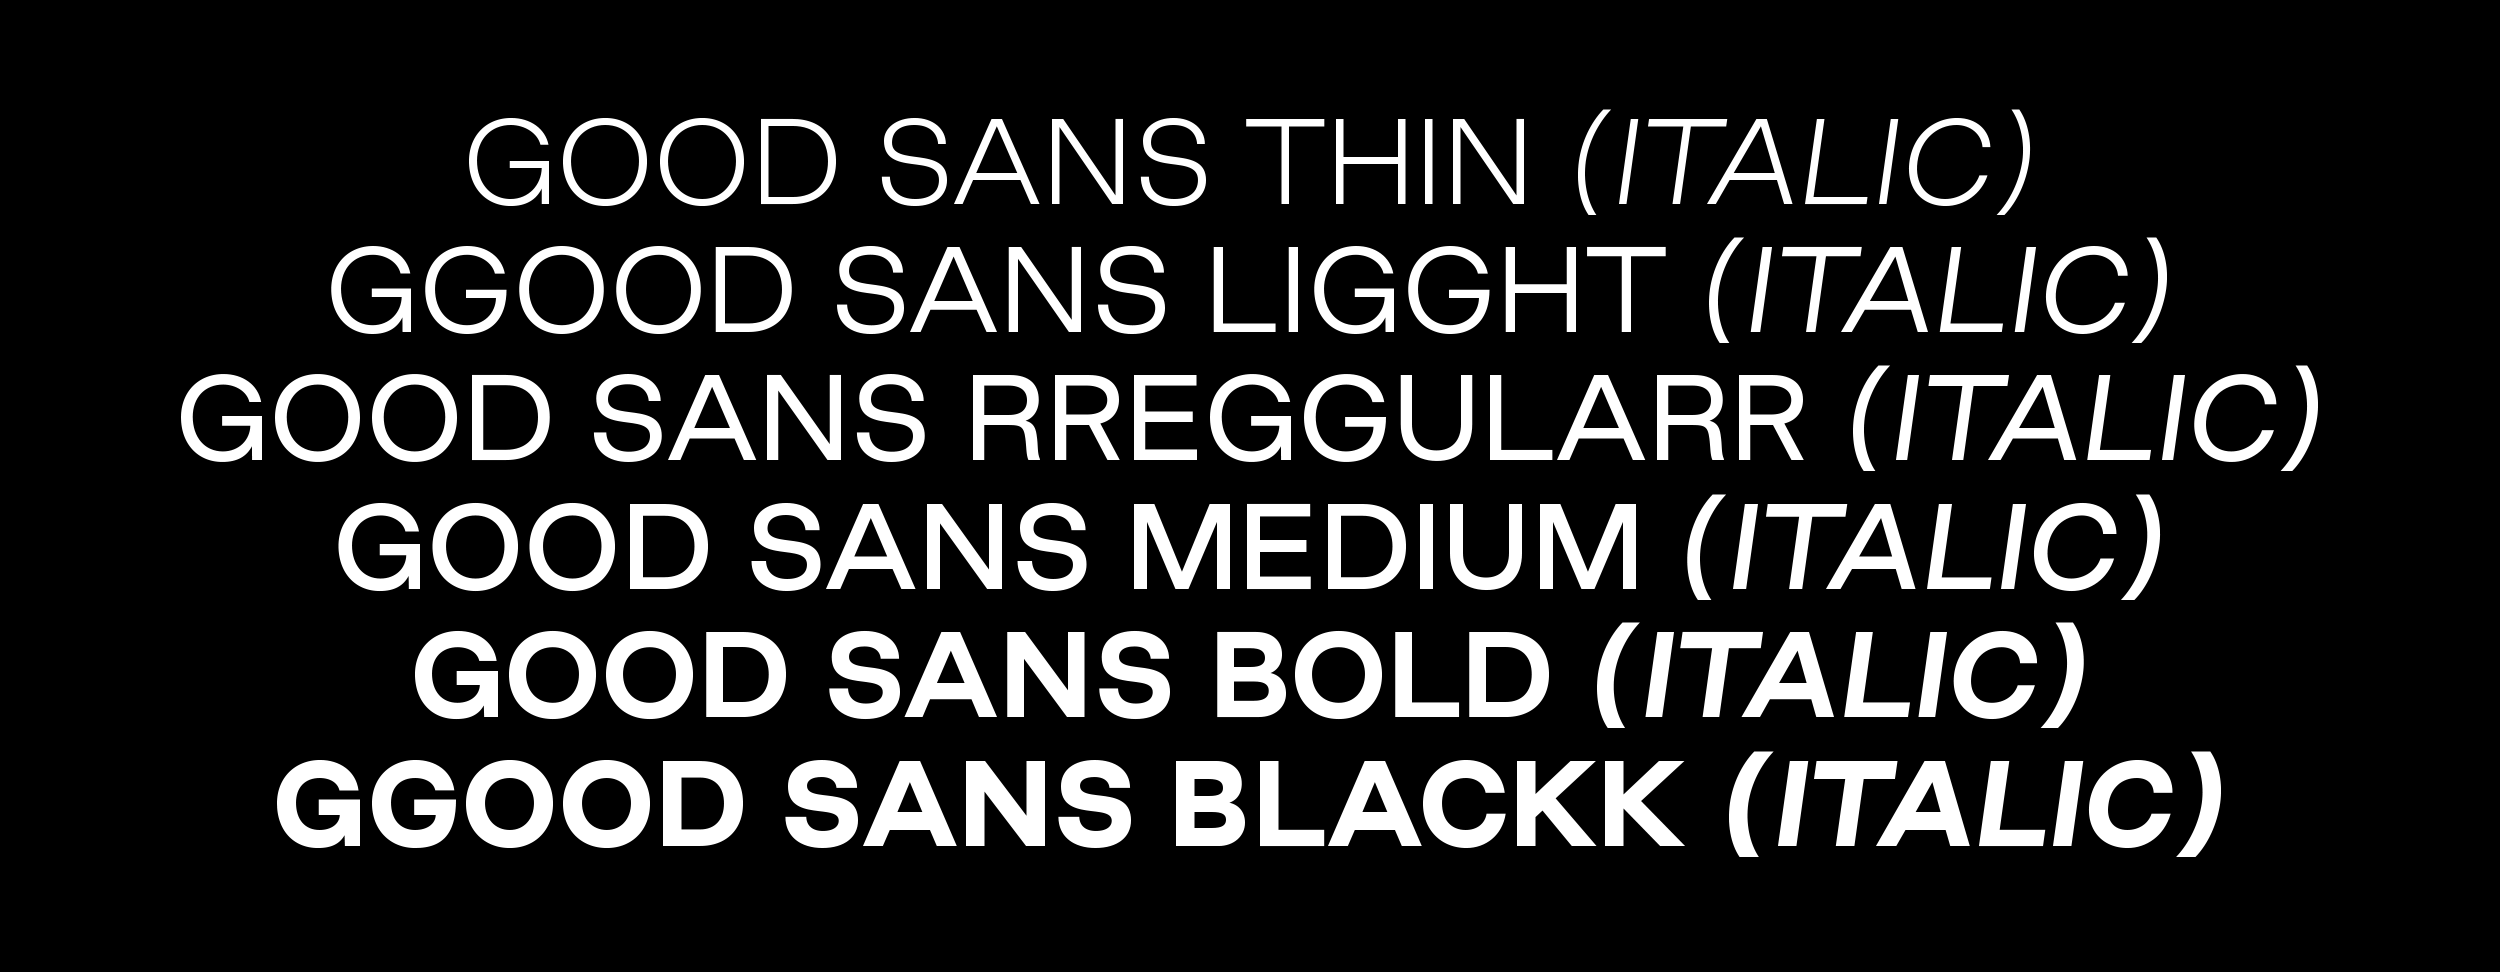 Good Sans Good Type Foundry